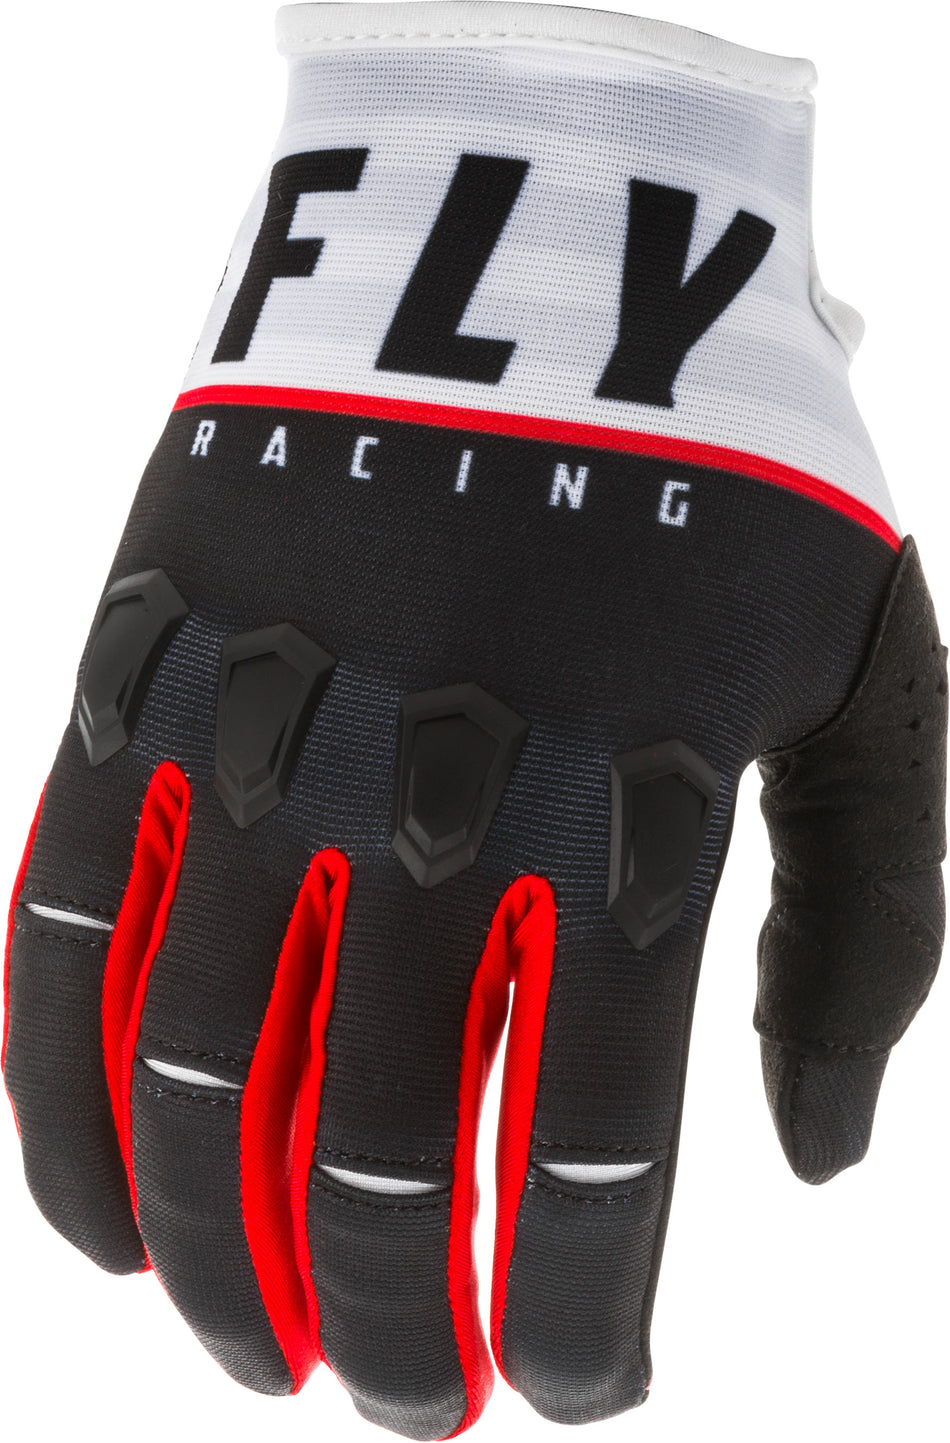 FLY RACING Kinetic K120 Gloves Black/White/Red Sz 10 373-41310